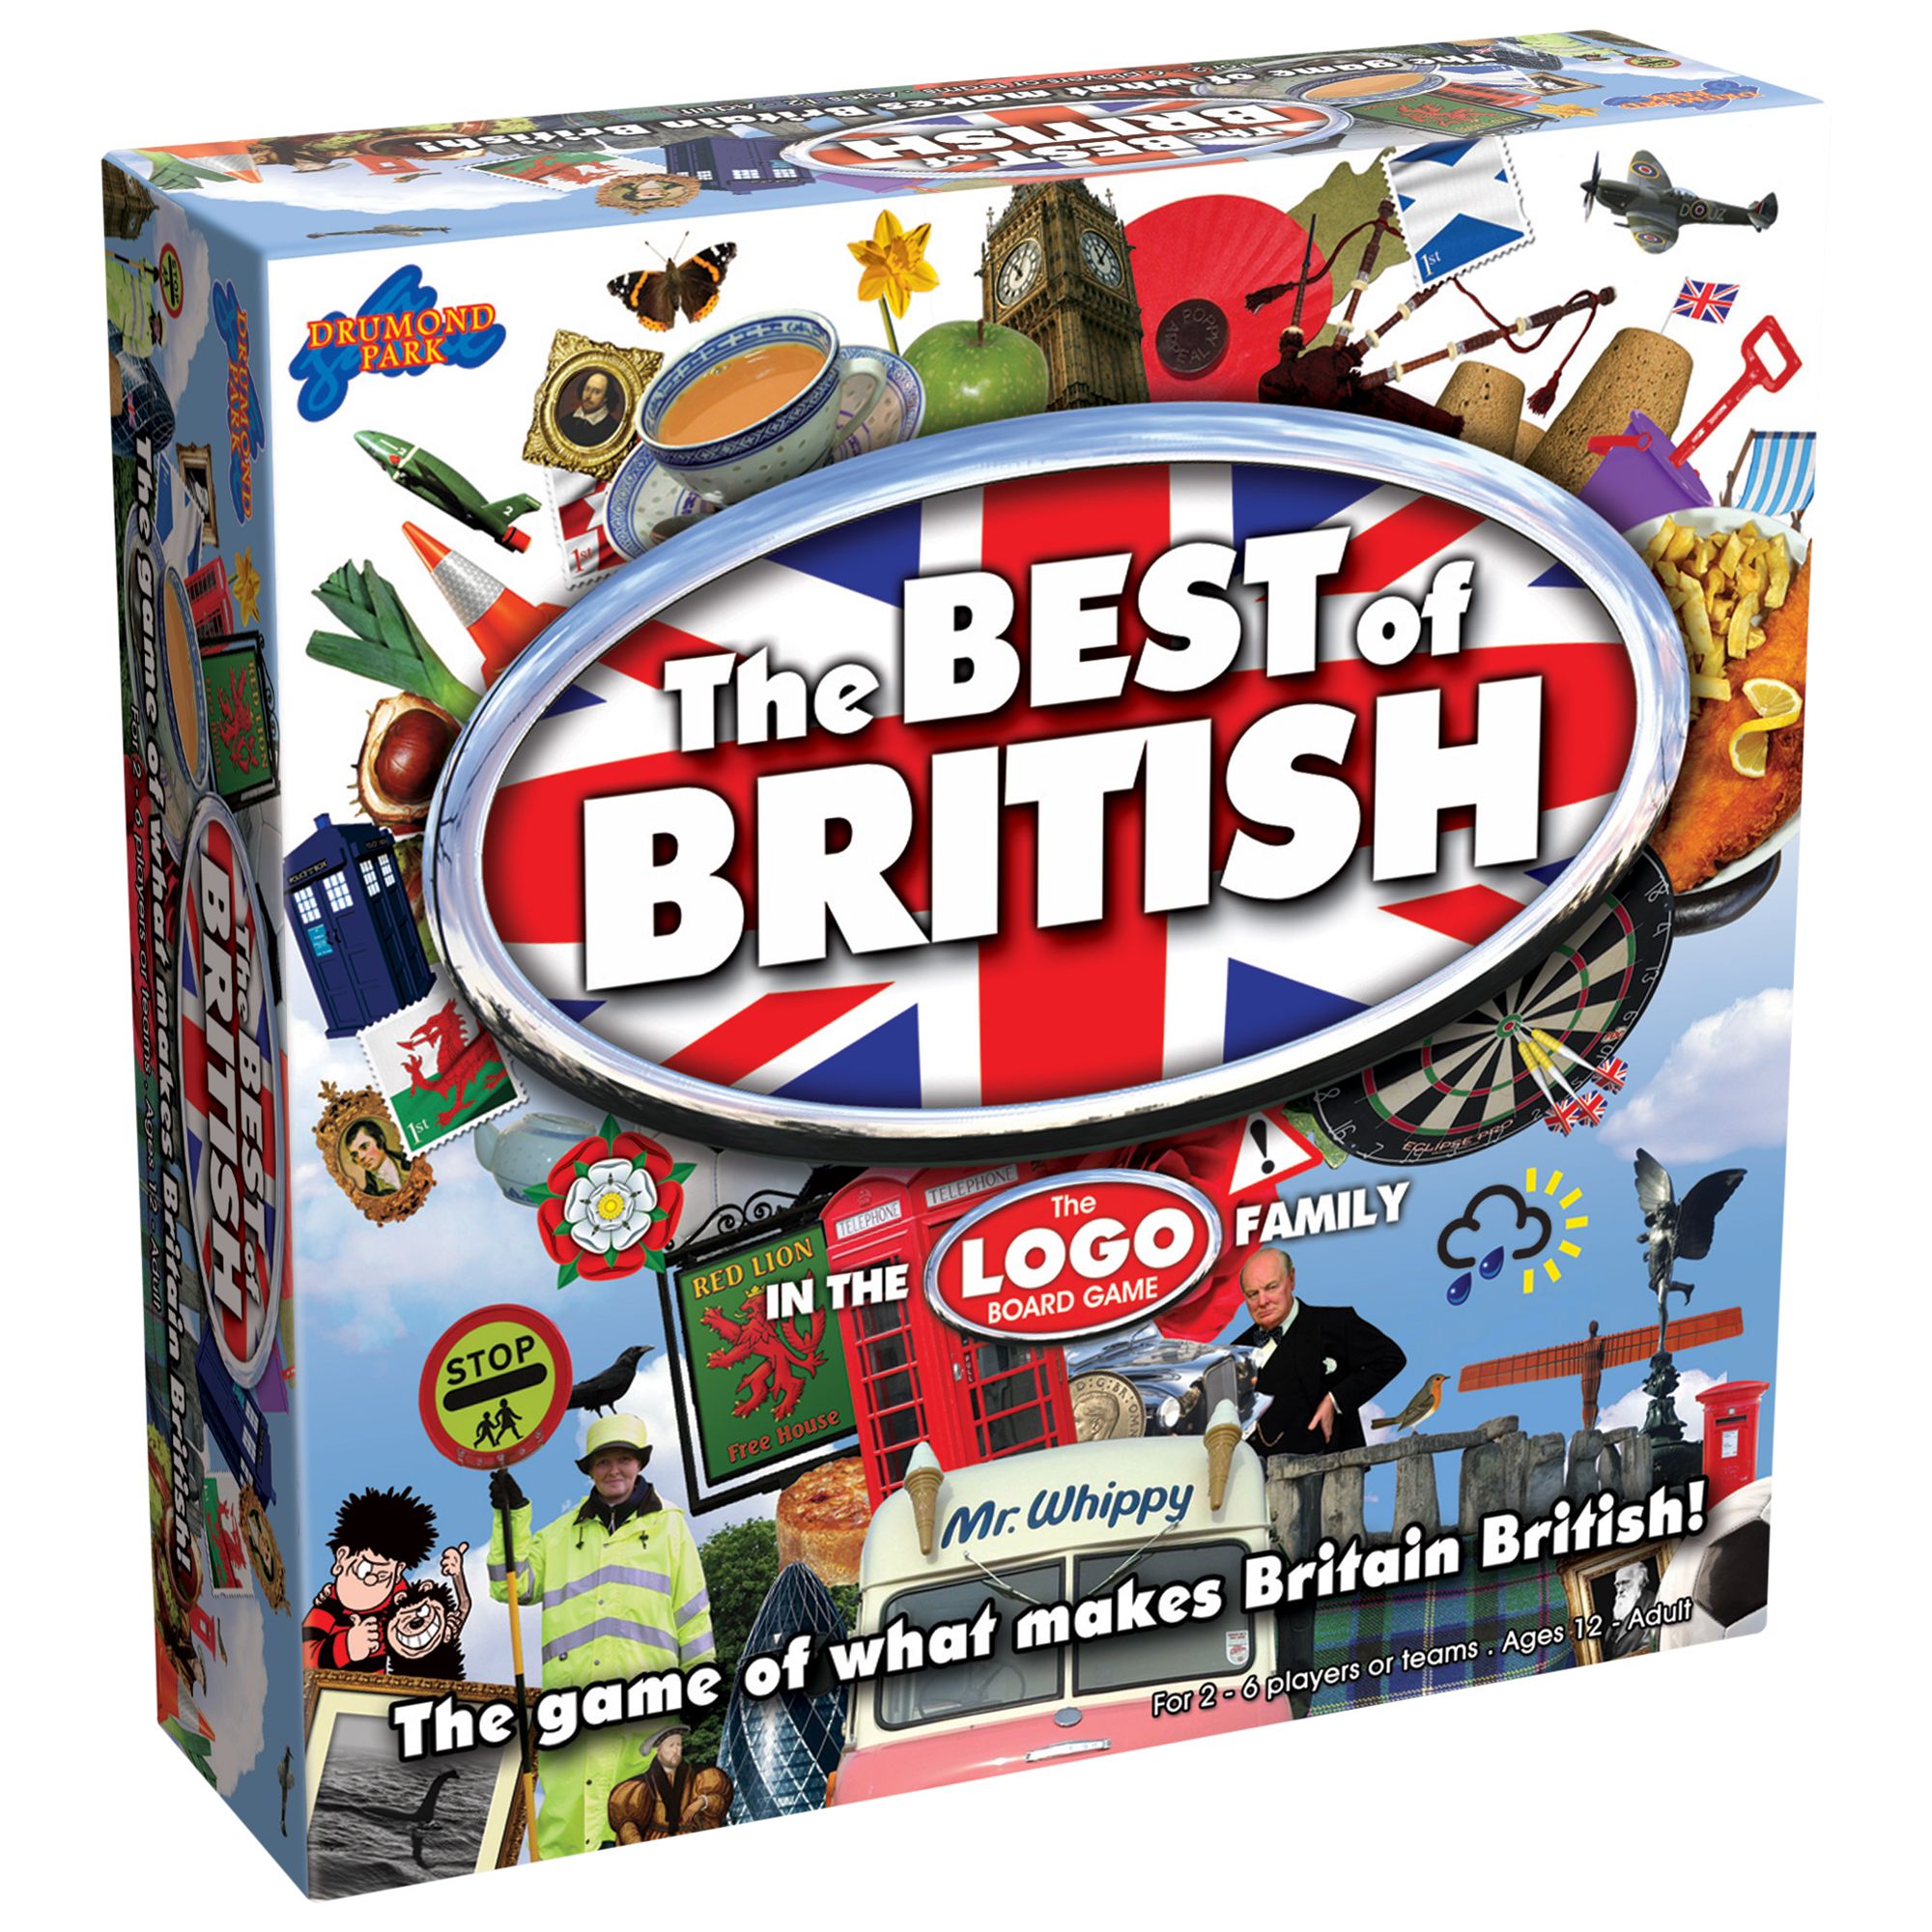 British games